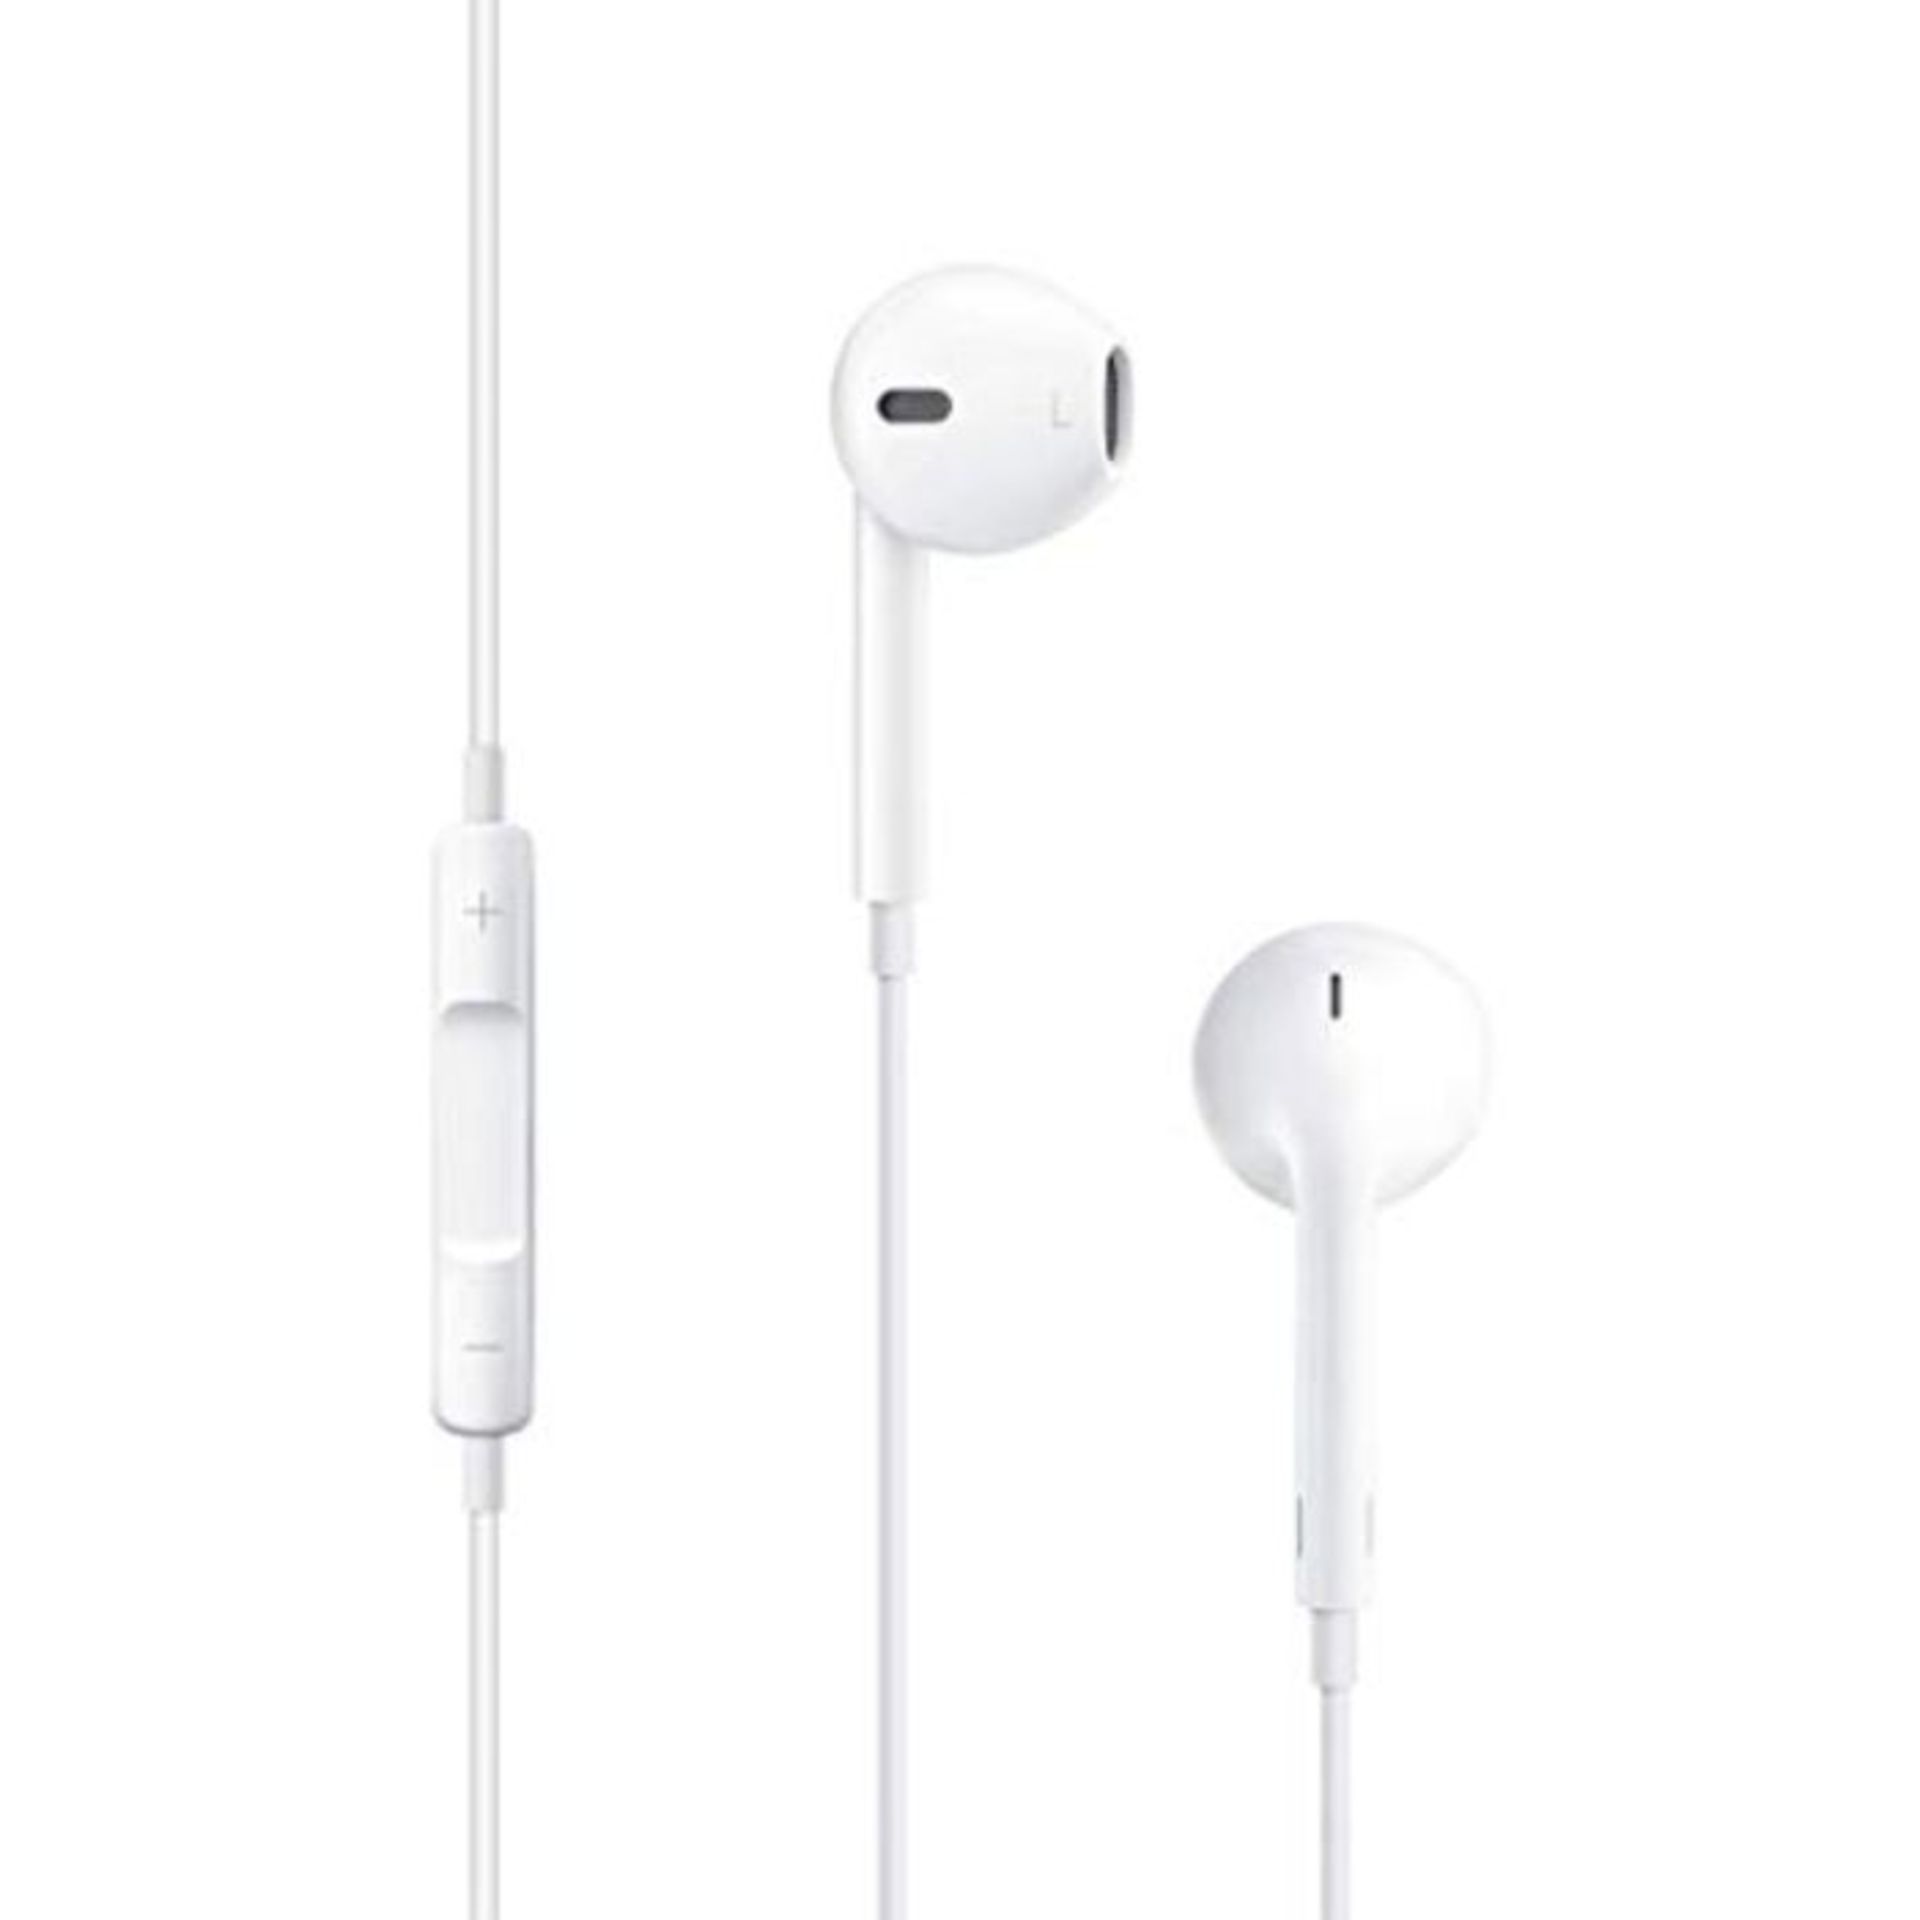 [CRACKED] EarPods with 3.5mm Headphone Plug - Image 4 of 6